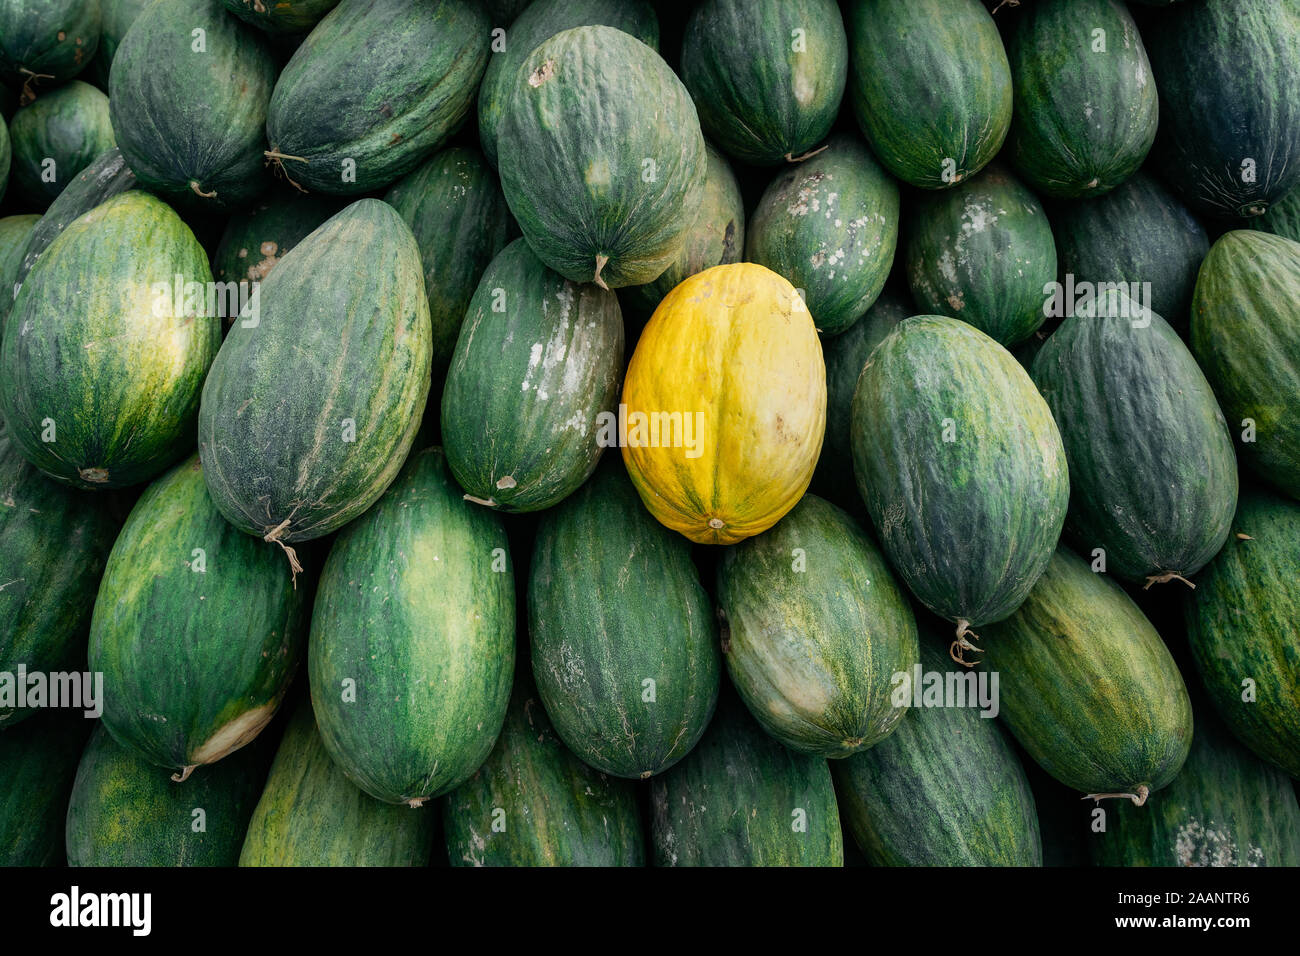 One yellow melon among many big sweet green melons Stock Photo